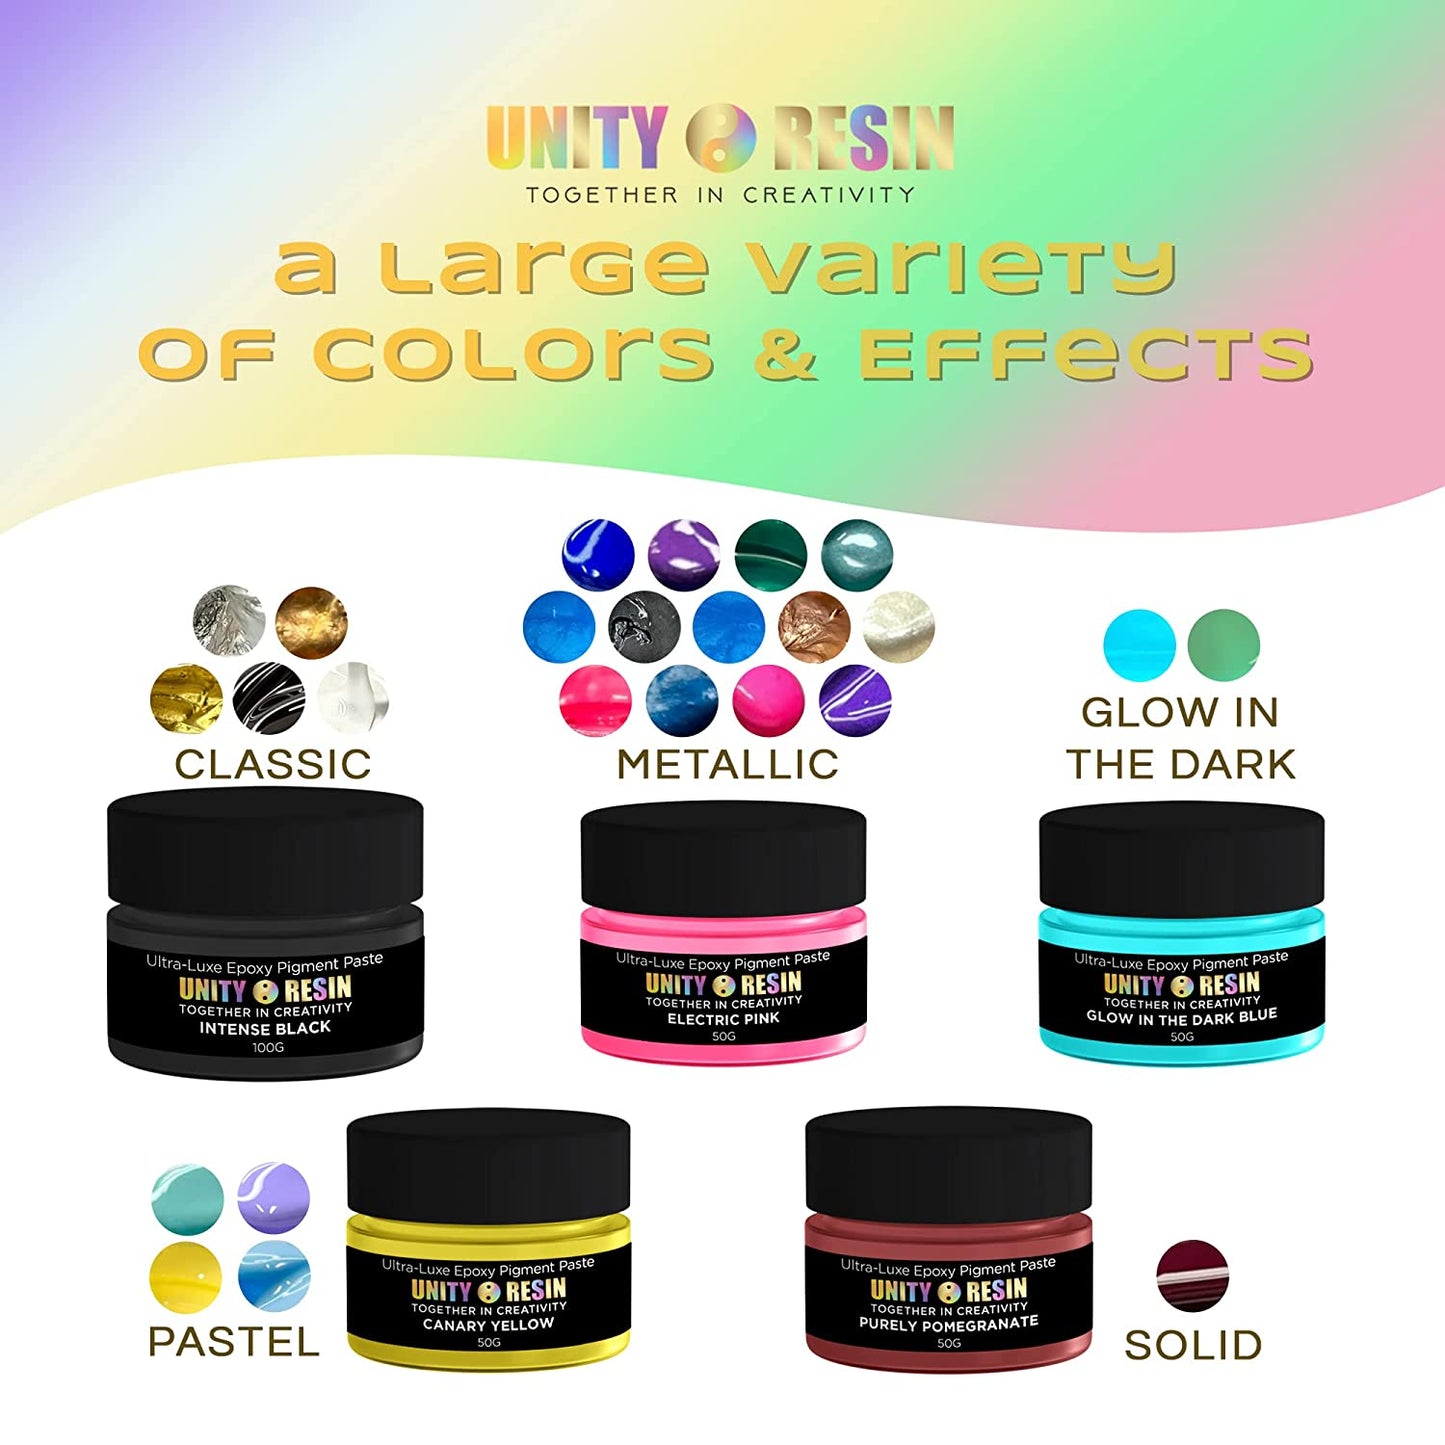 Ultra-Luxe Epoxy Resin Pigment Paste- INTENSE BLACK (100G).